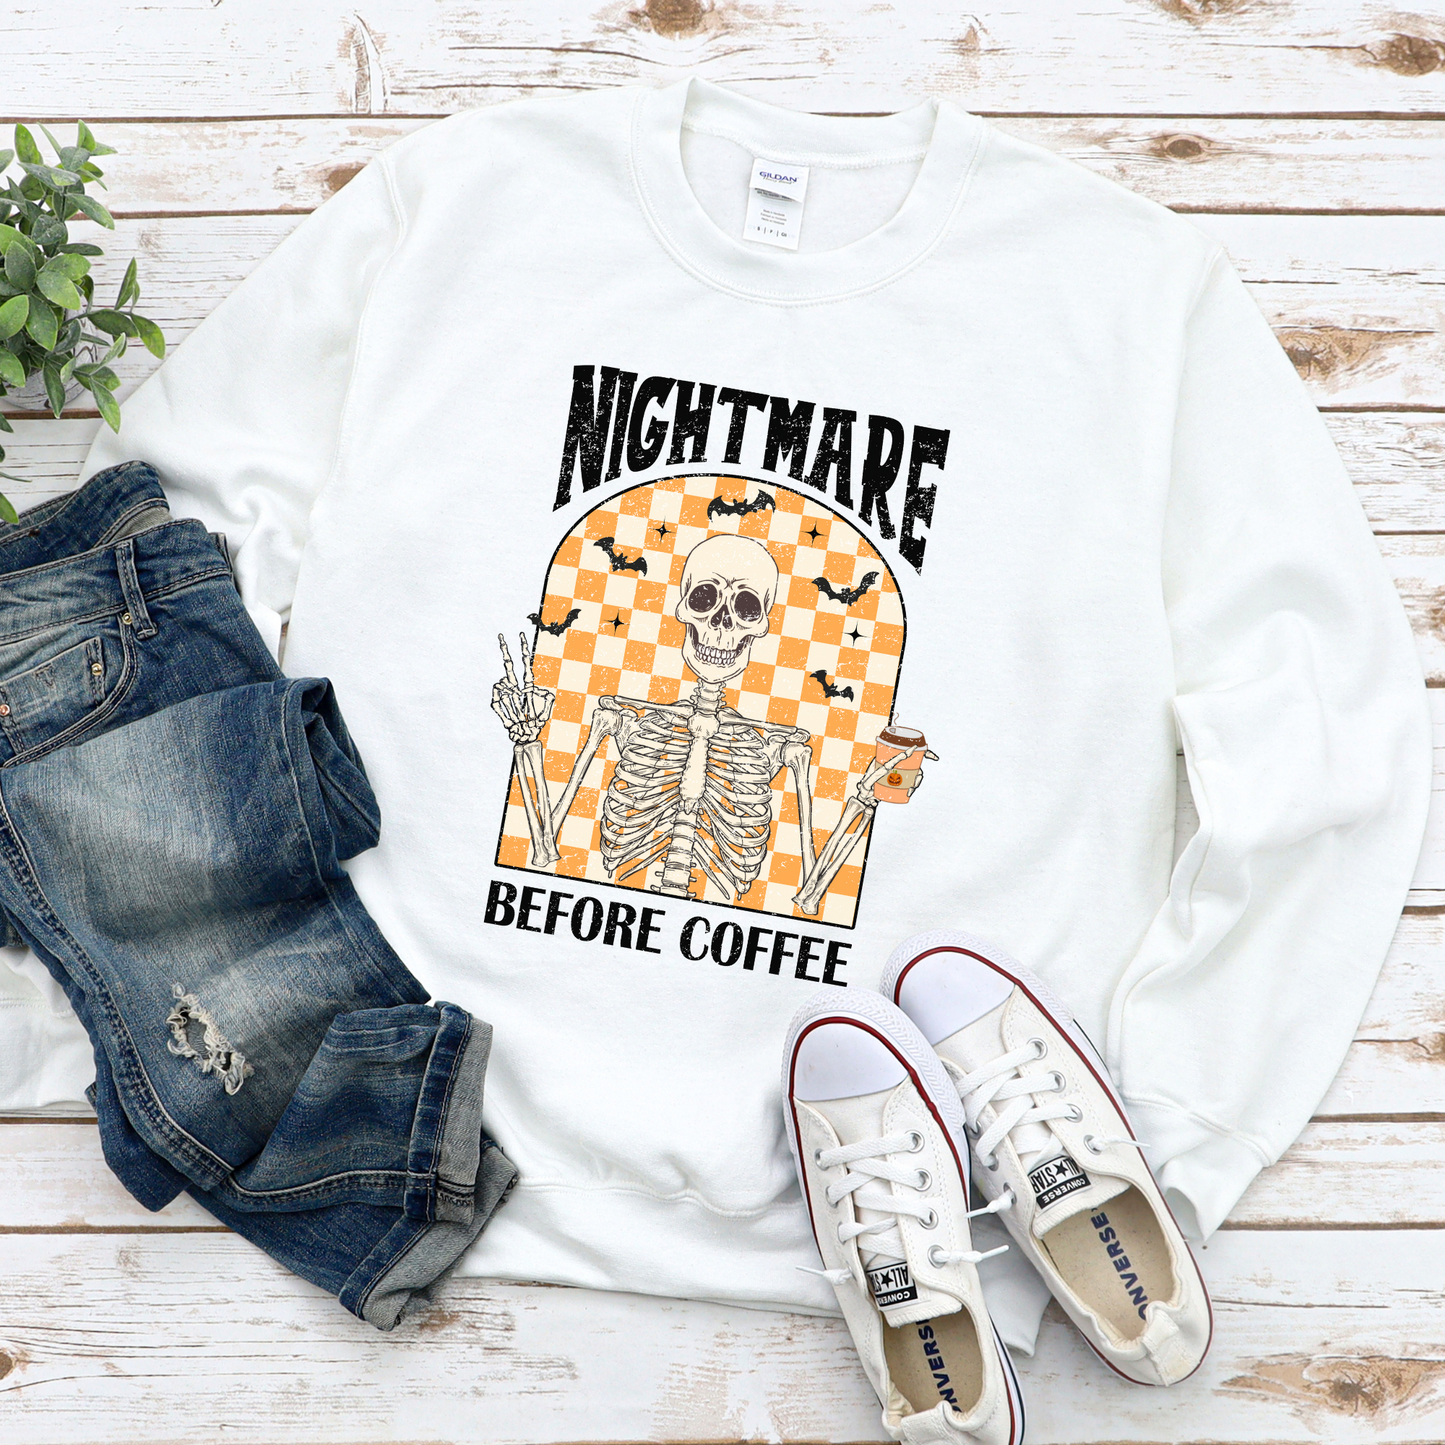 Nightmare Before Coffee Crewneck Sweater